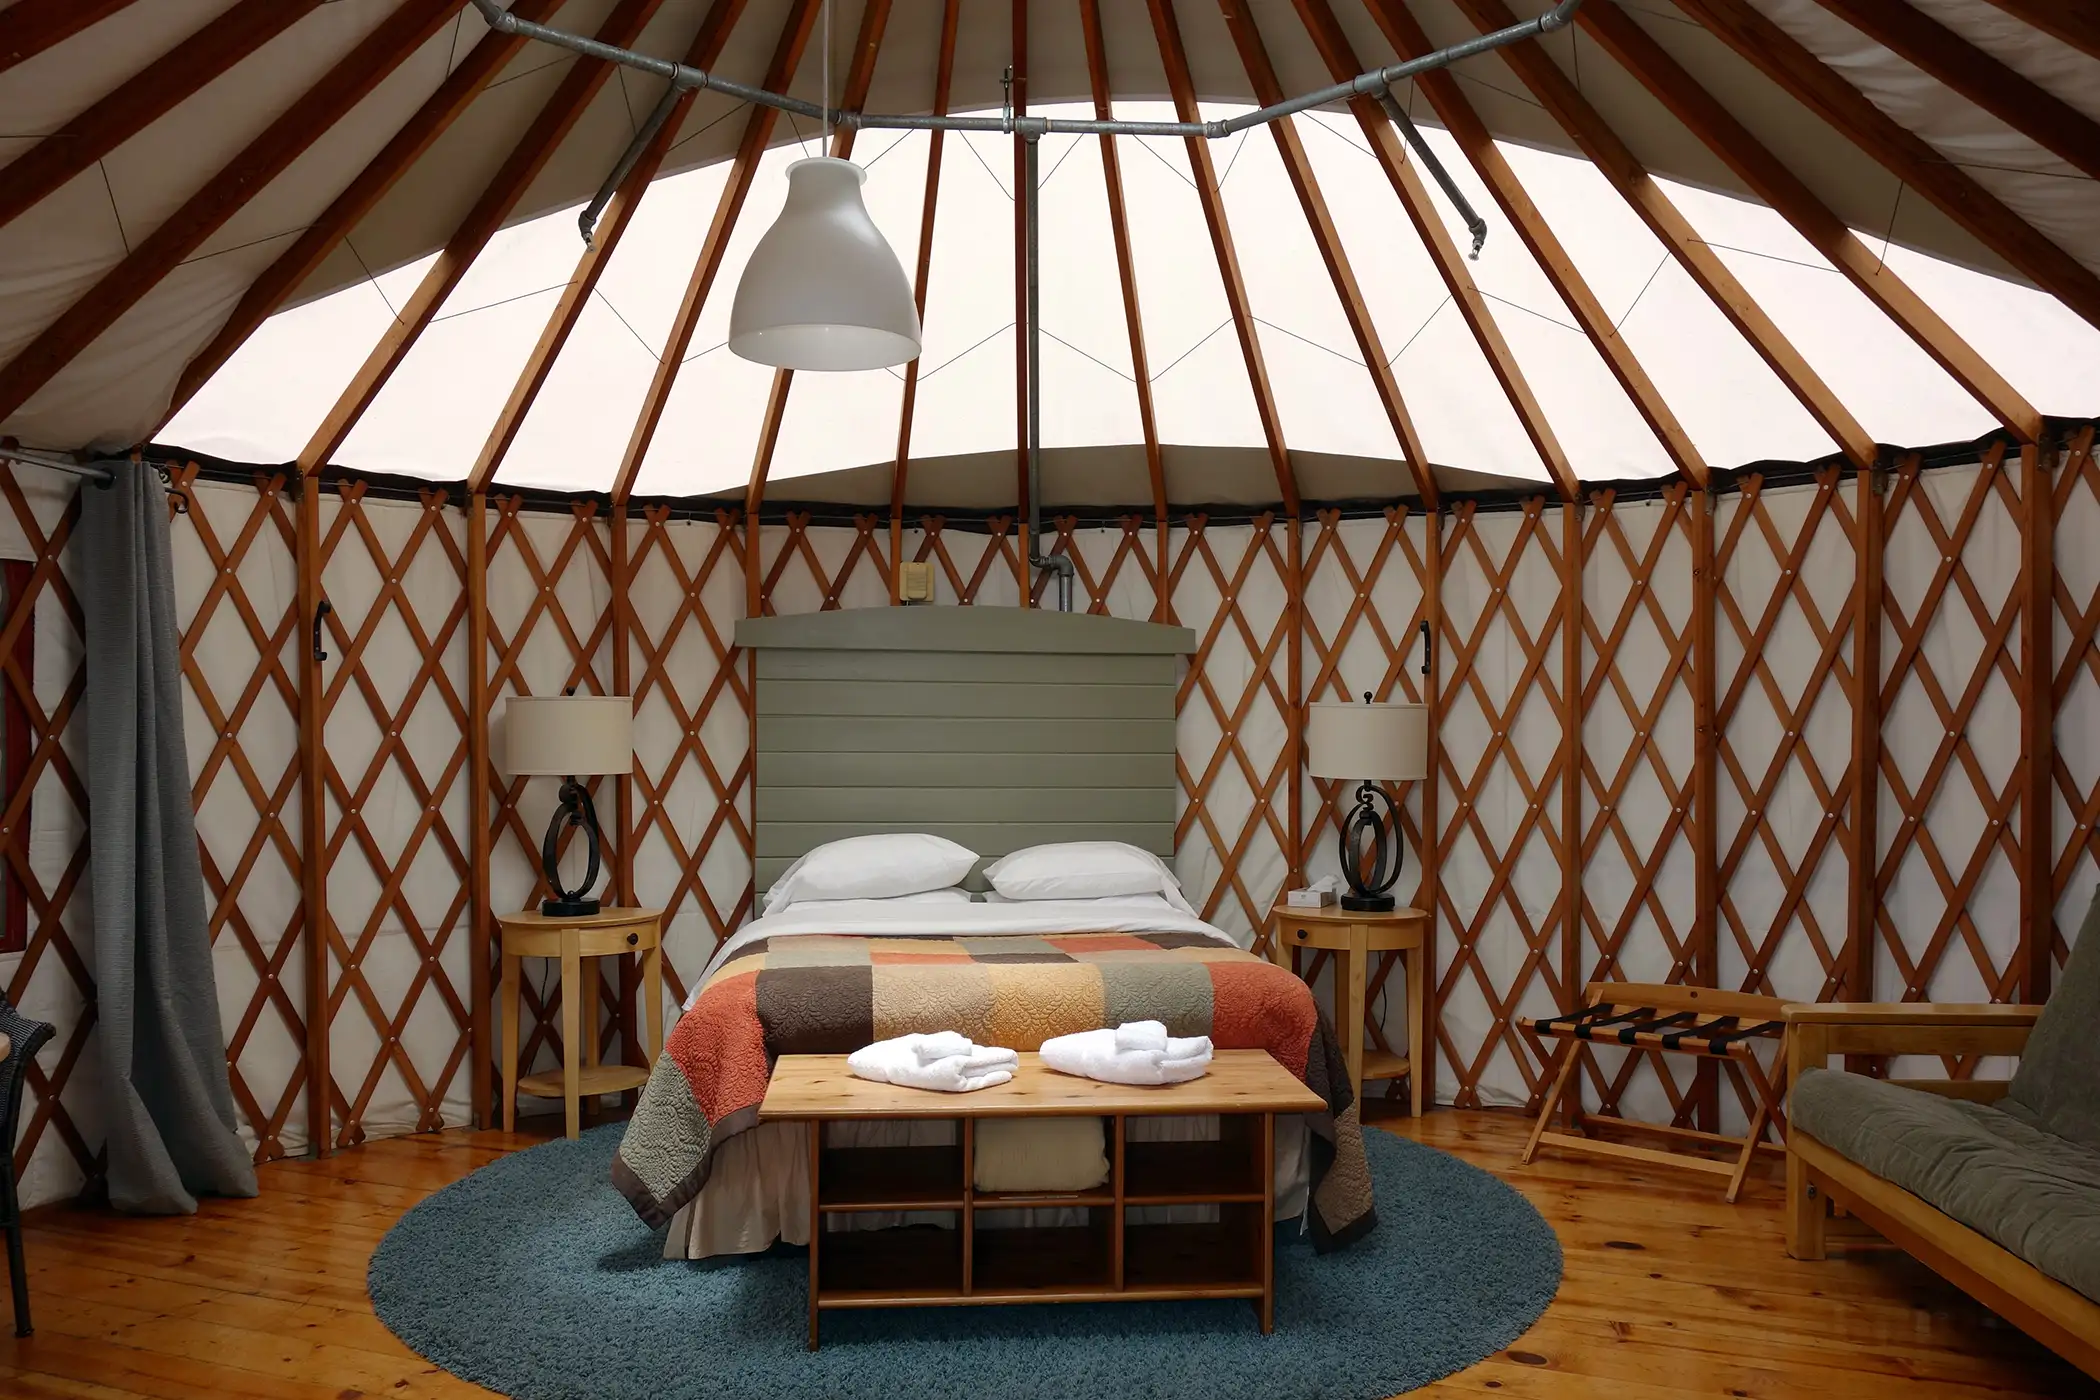 Treebones Resort offers ocean view yurts on Highway 1 in Big Sur, California known as glamping, or luxury camping.